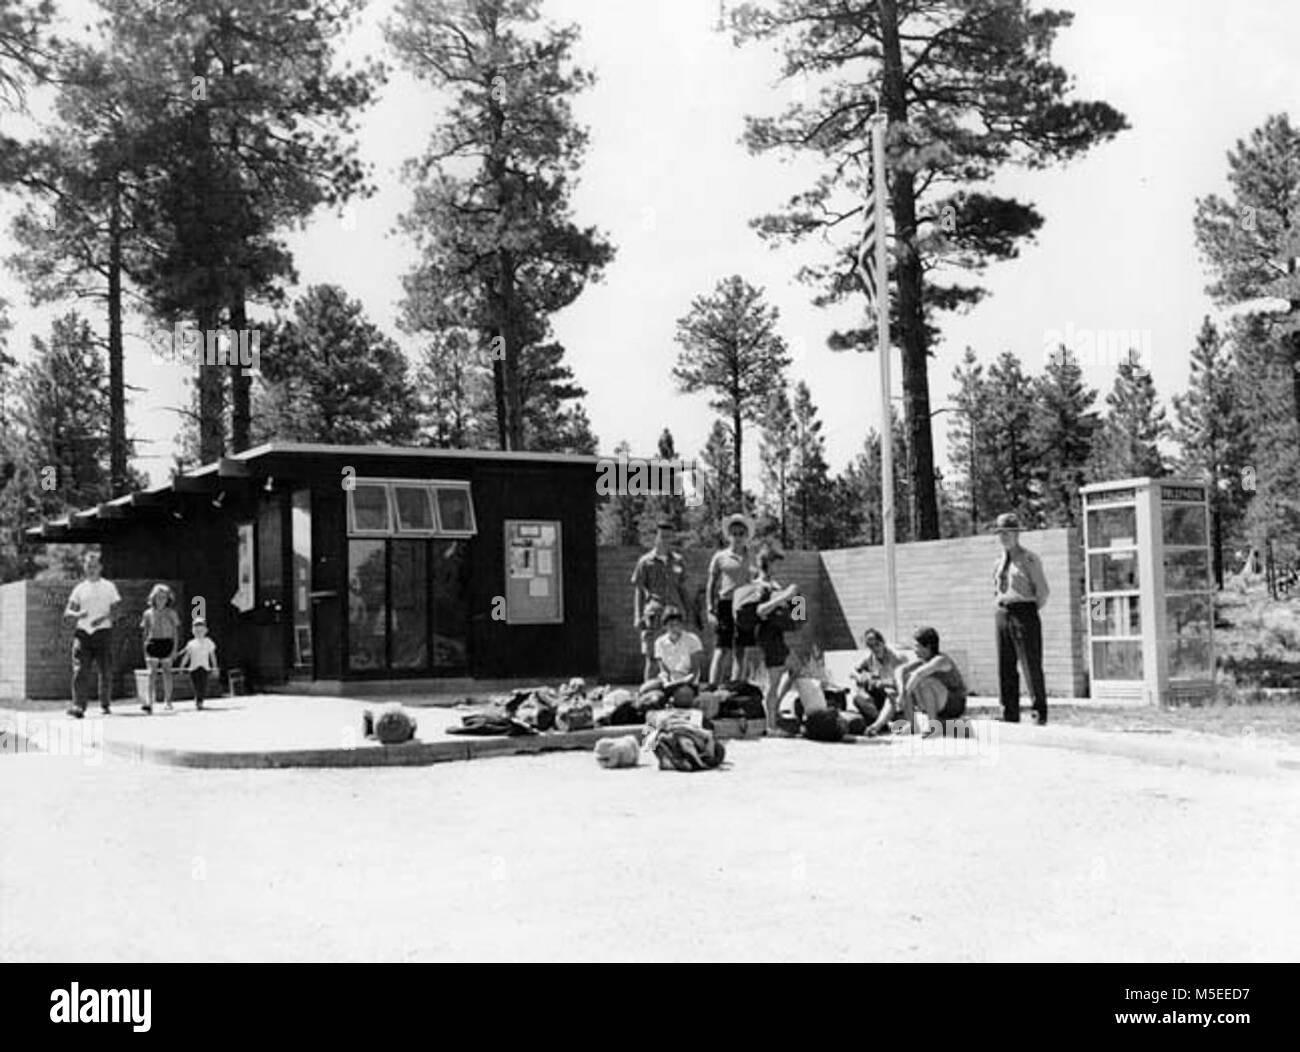 Grand Canyon- Téma Station Camping VISITEURS À MISSION 66 MATHER CAMPGROUND RANGER STATION, S RIM, GRCA. 07 septembre 1961. . Banque D'Images